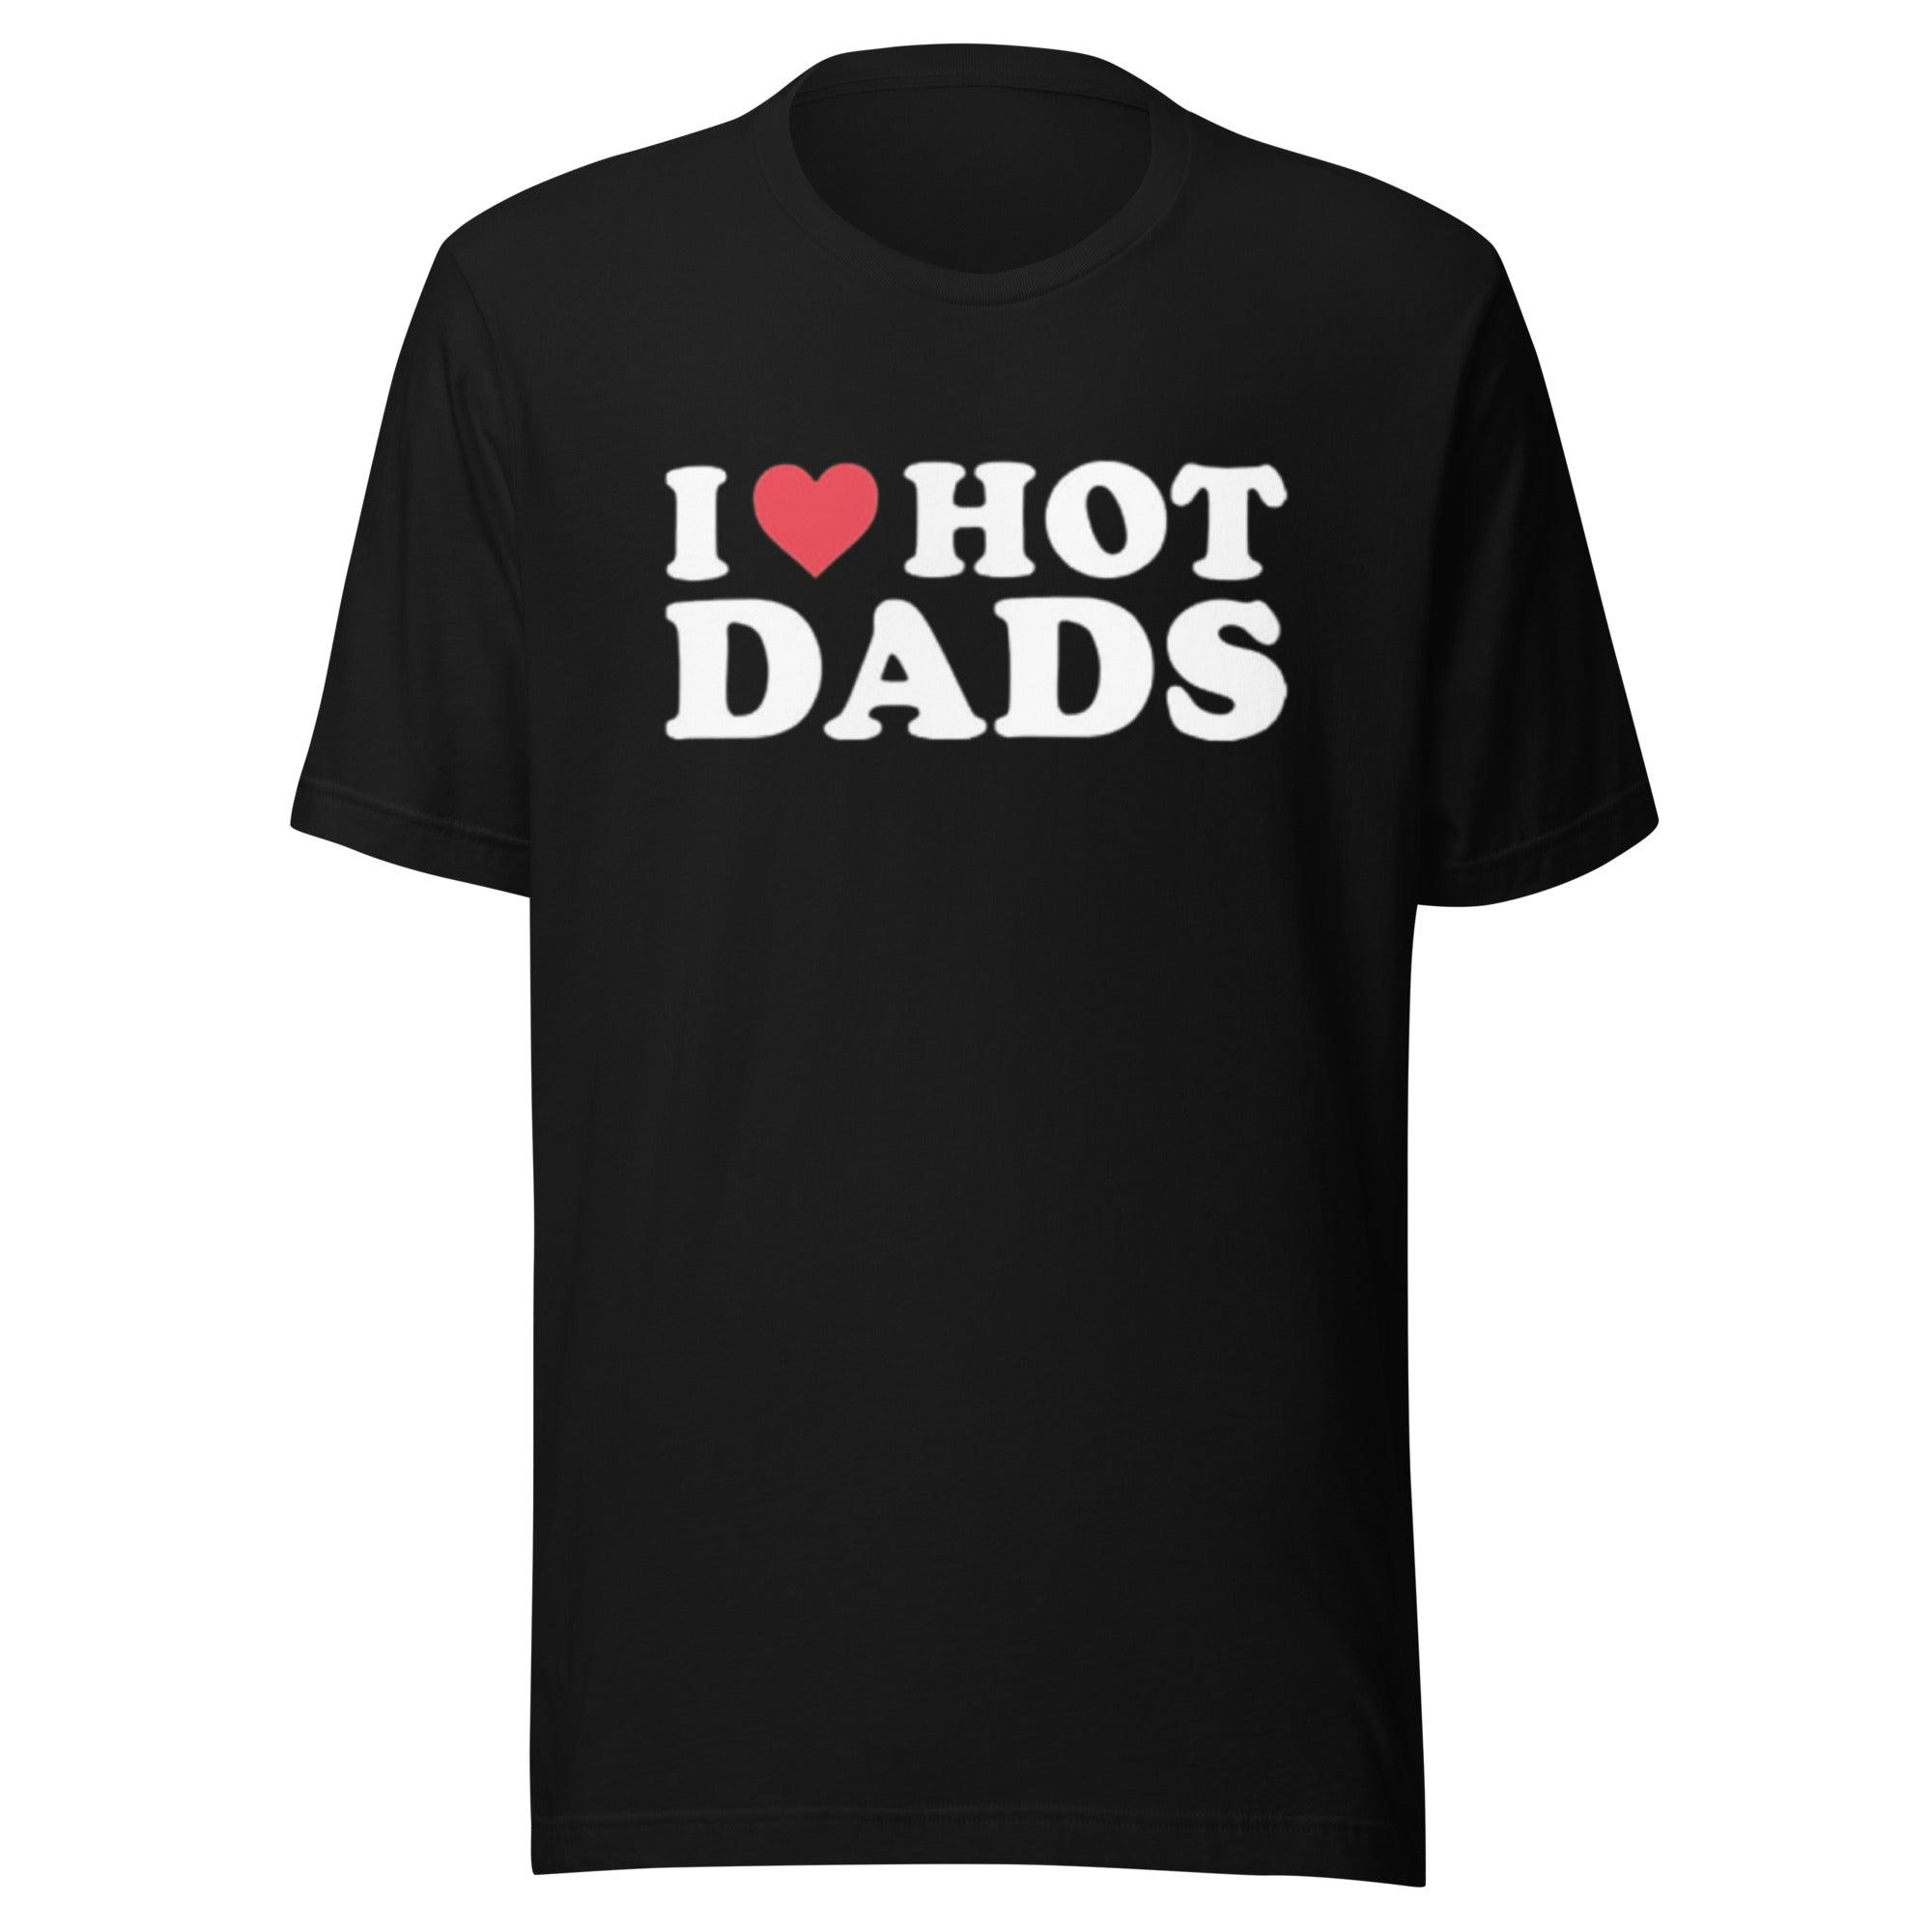 I Love Hot Dads T-shirt with Heart Shaped Love Short Sleeve Top - TopKoalaTee